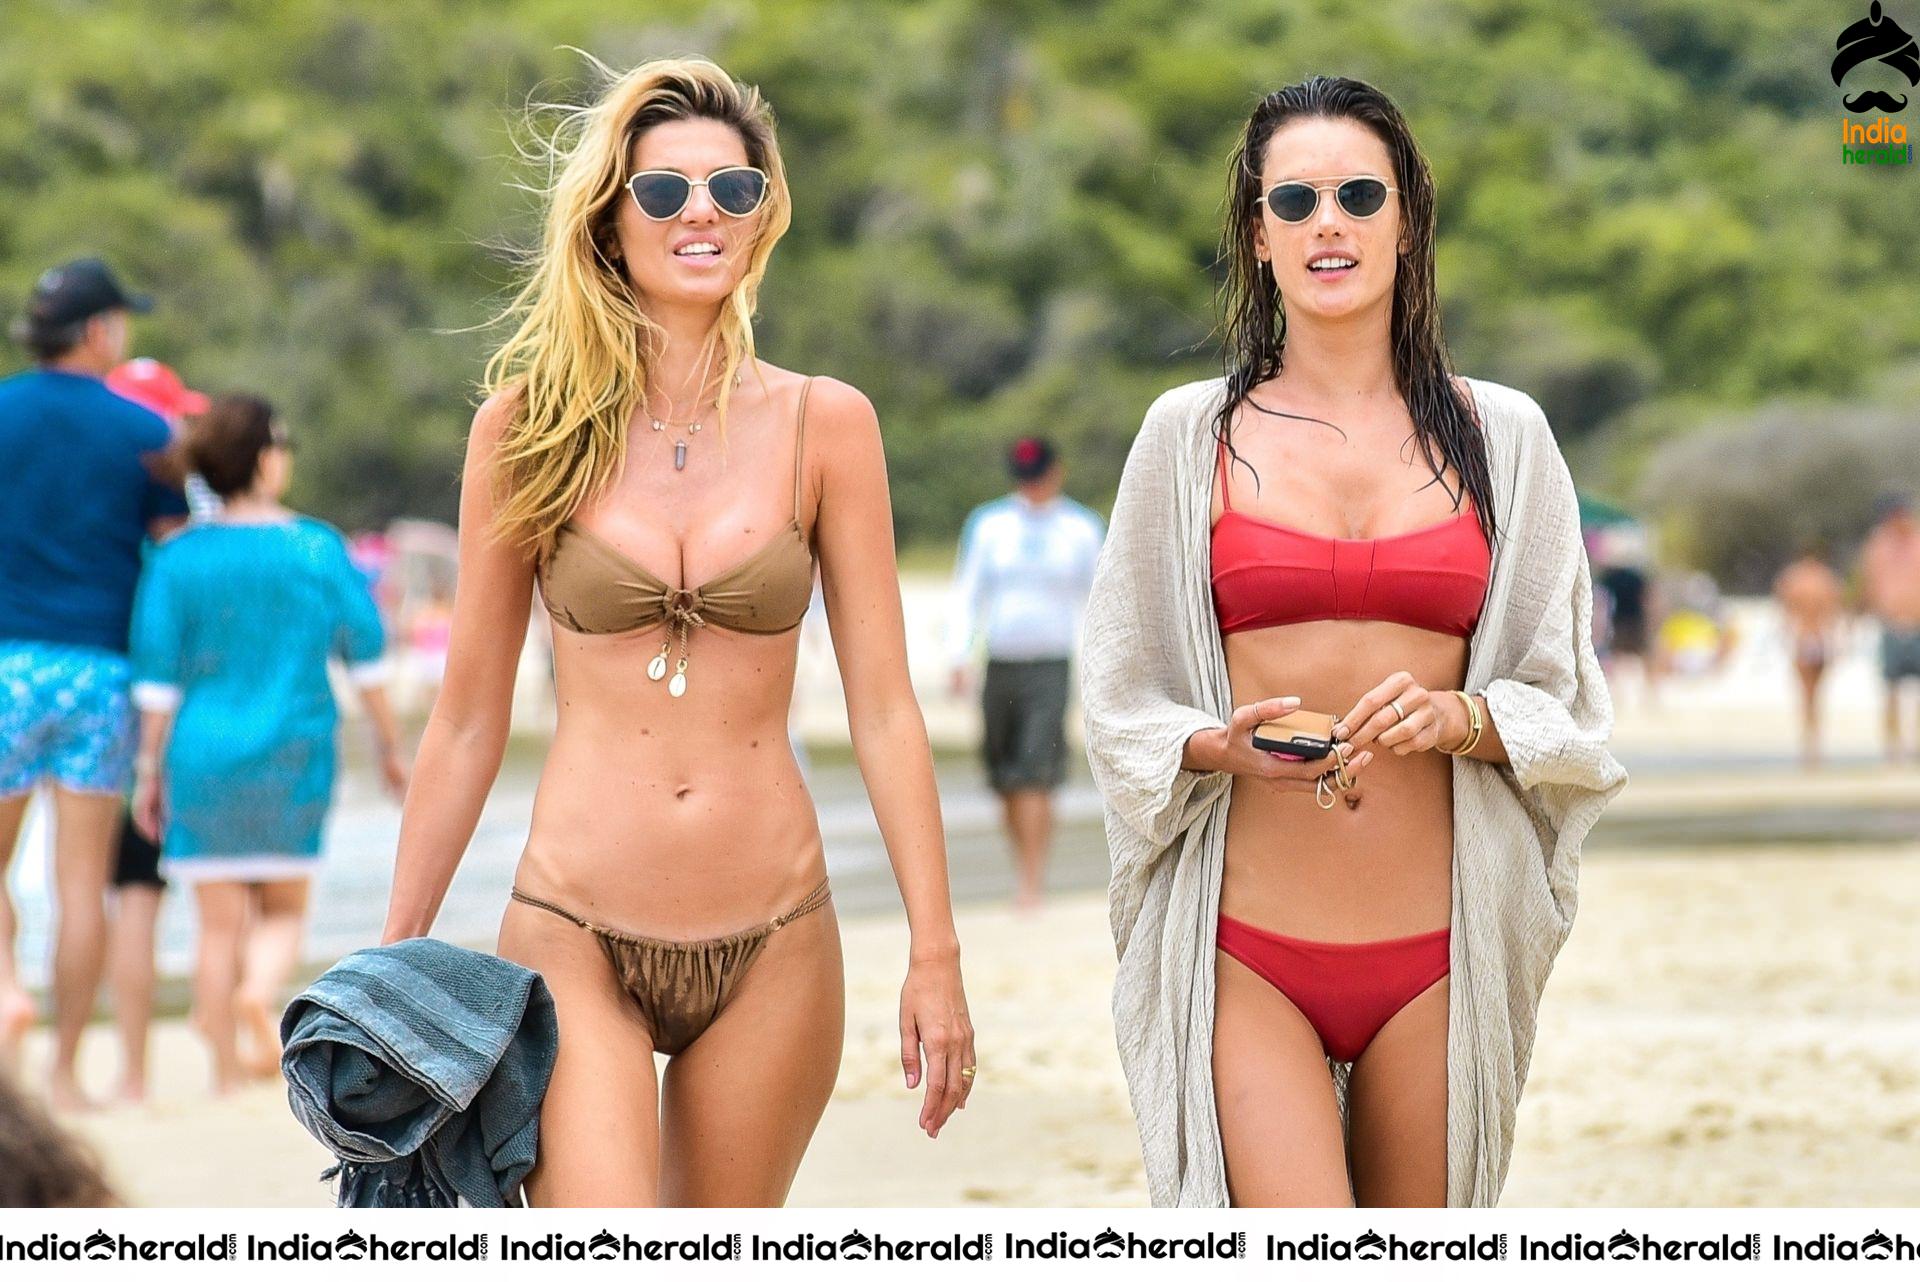 Alessandra Ambrosio in a red bikini at the beach in Florianopolis